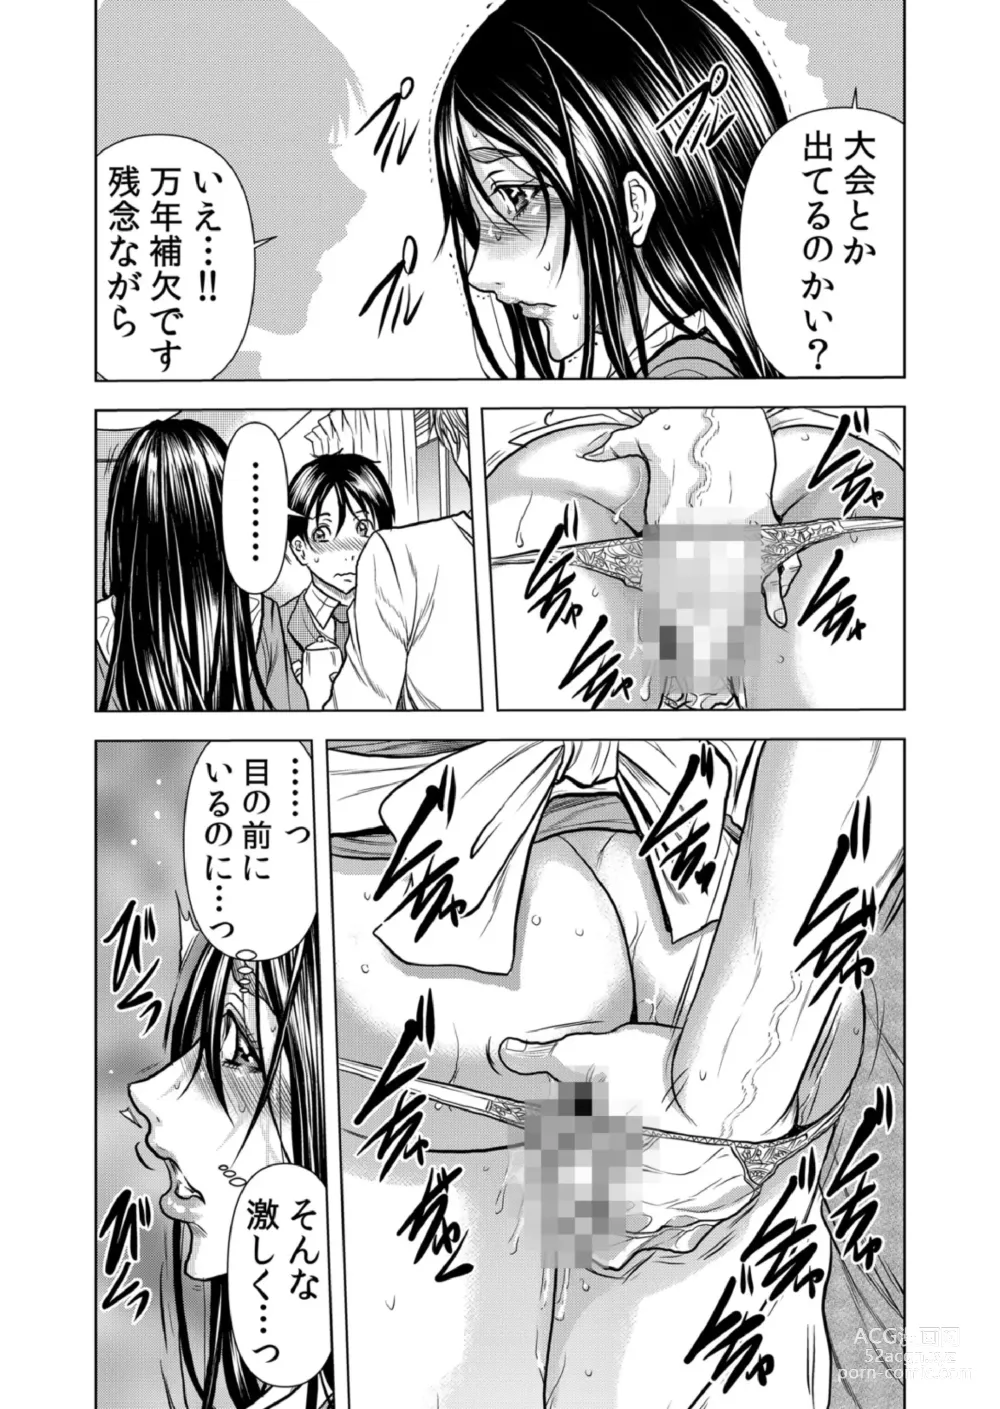 Page 9 of manga Mamasan,yobai ha OK desuka? VOL9